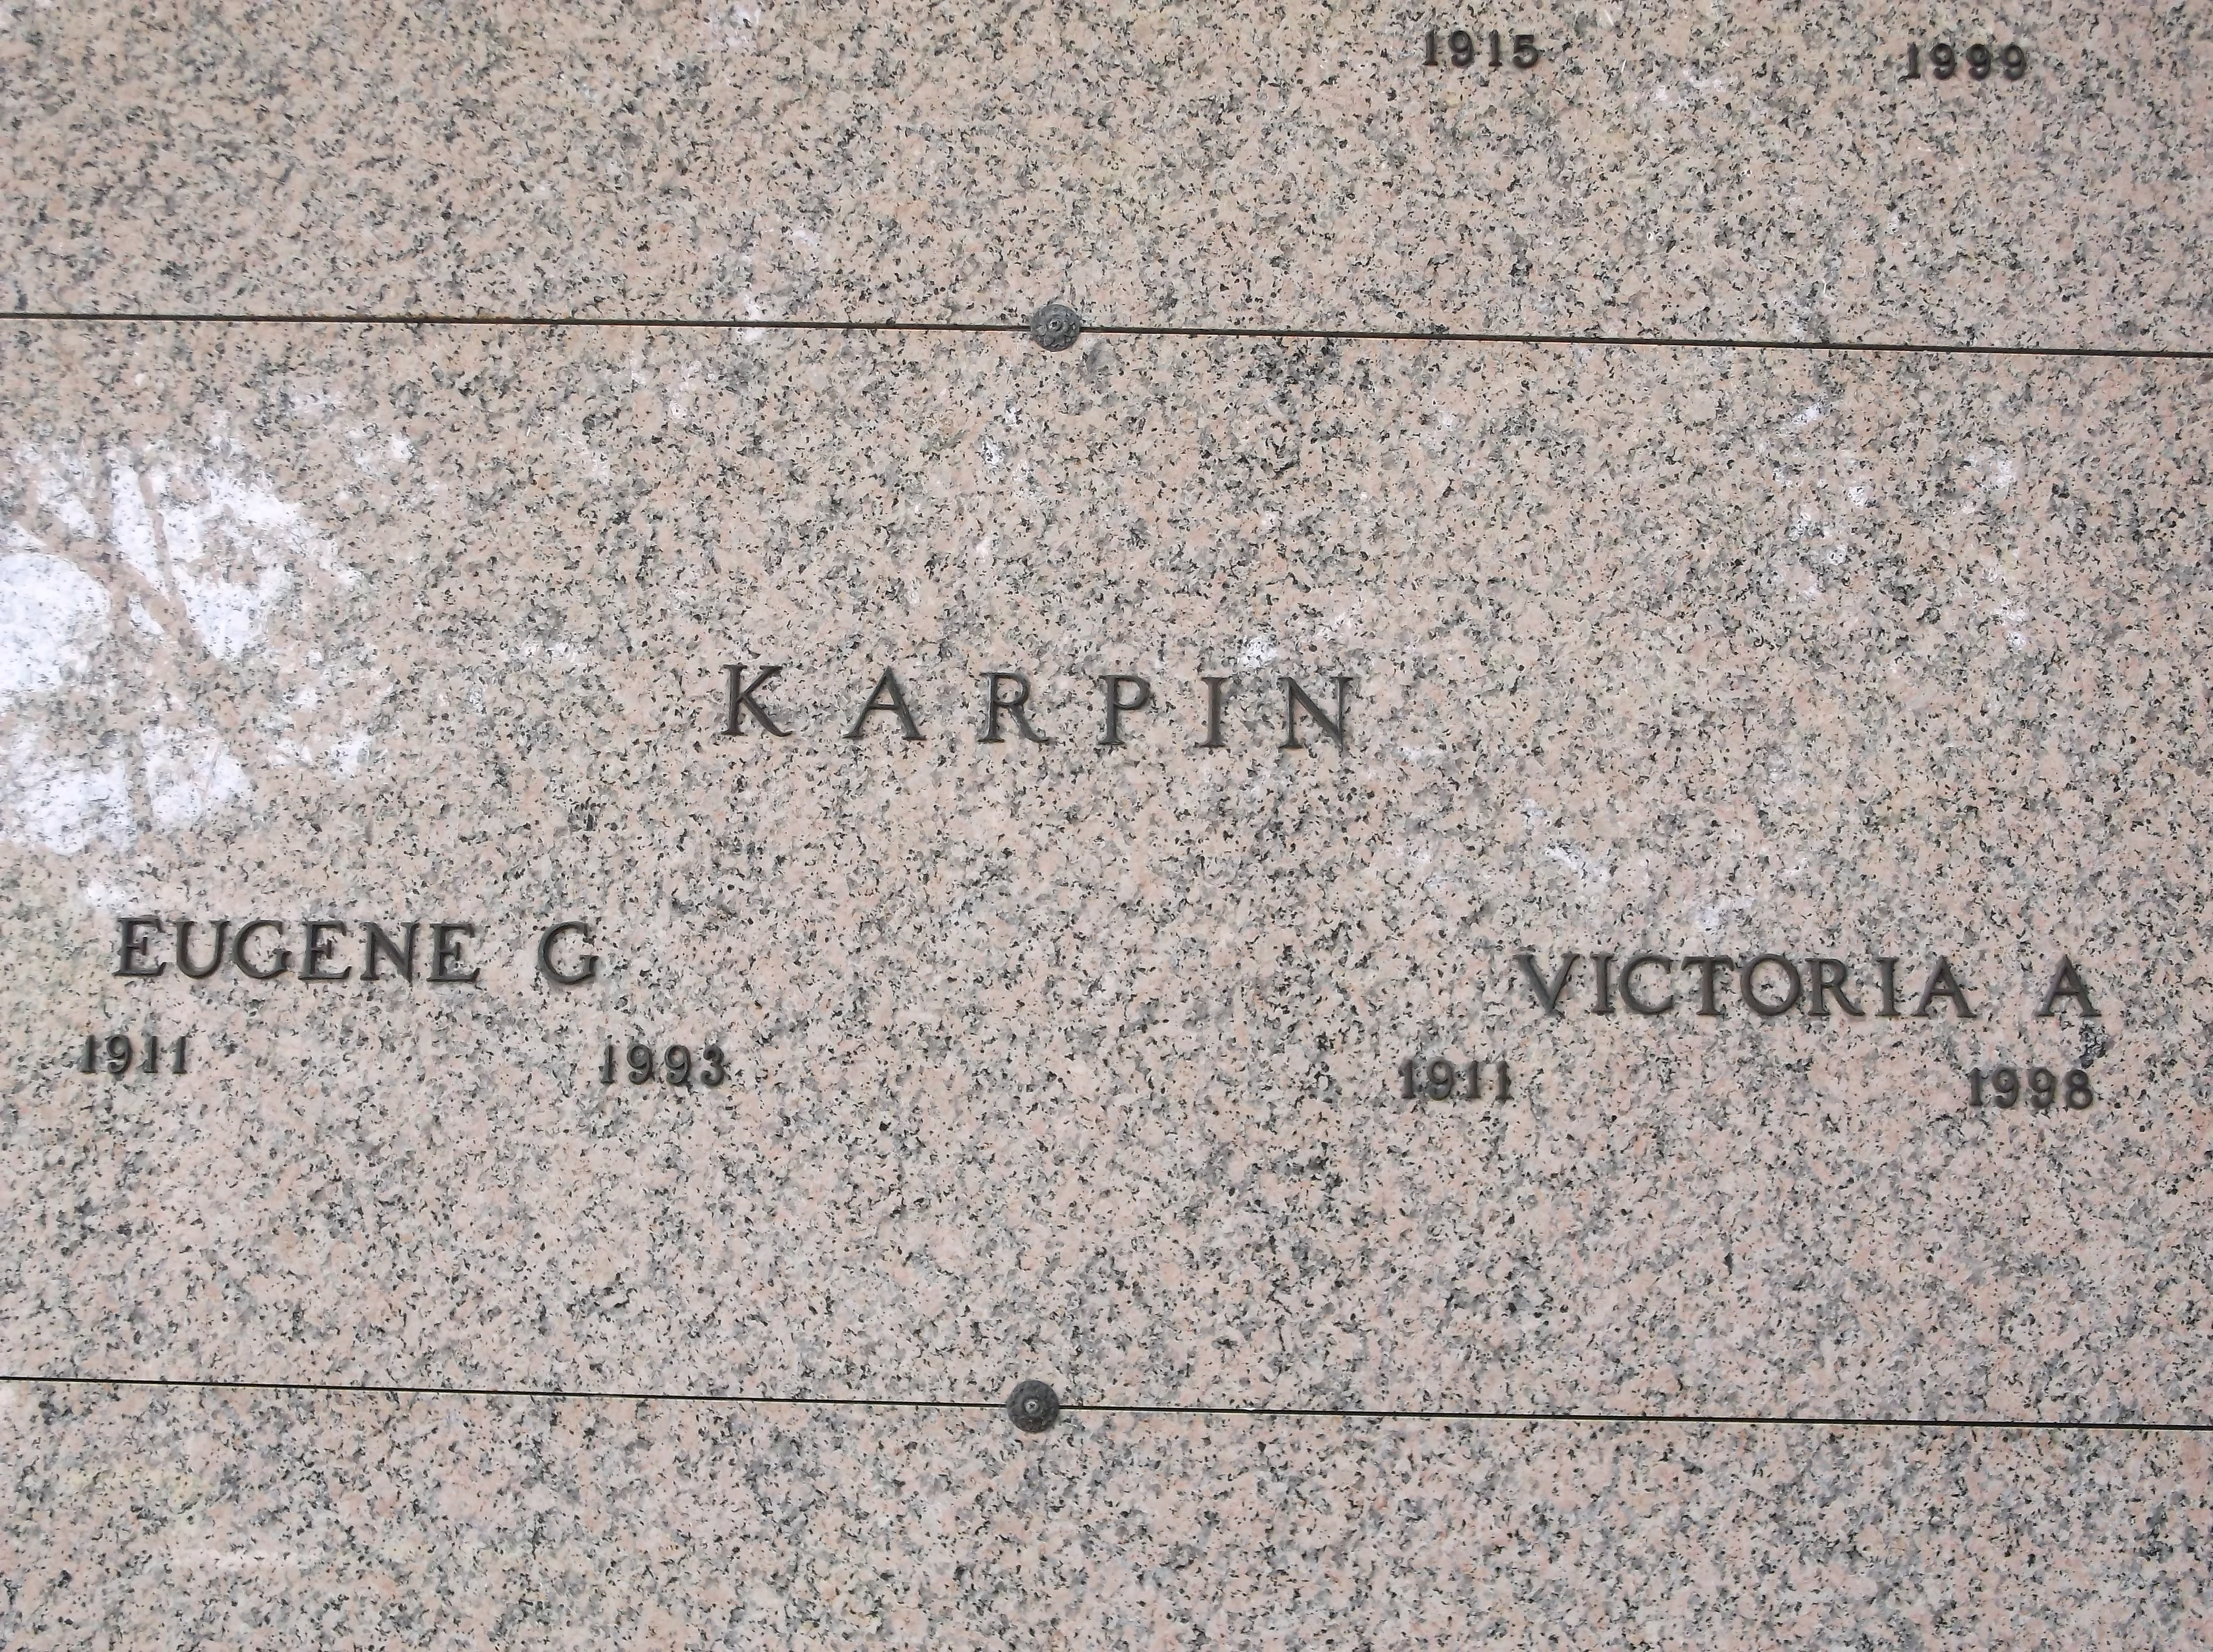 Victoria A Karpin